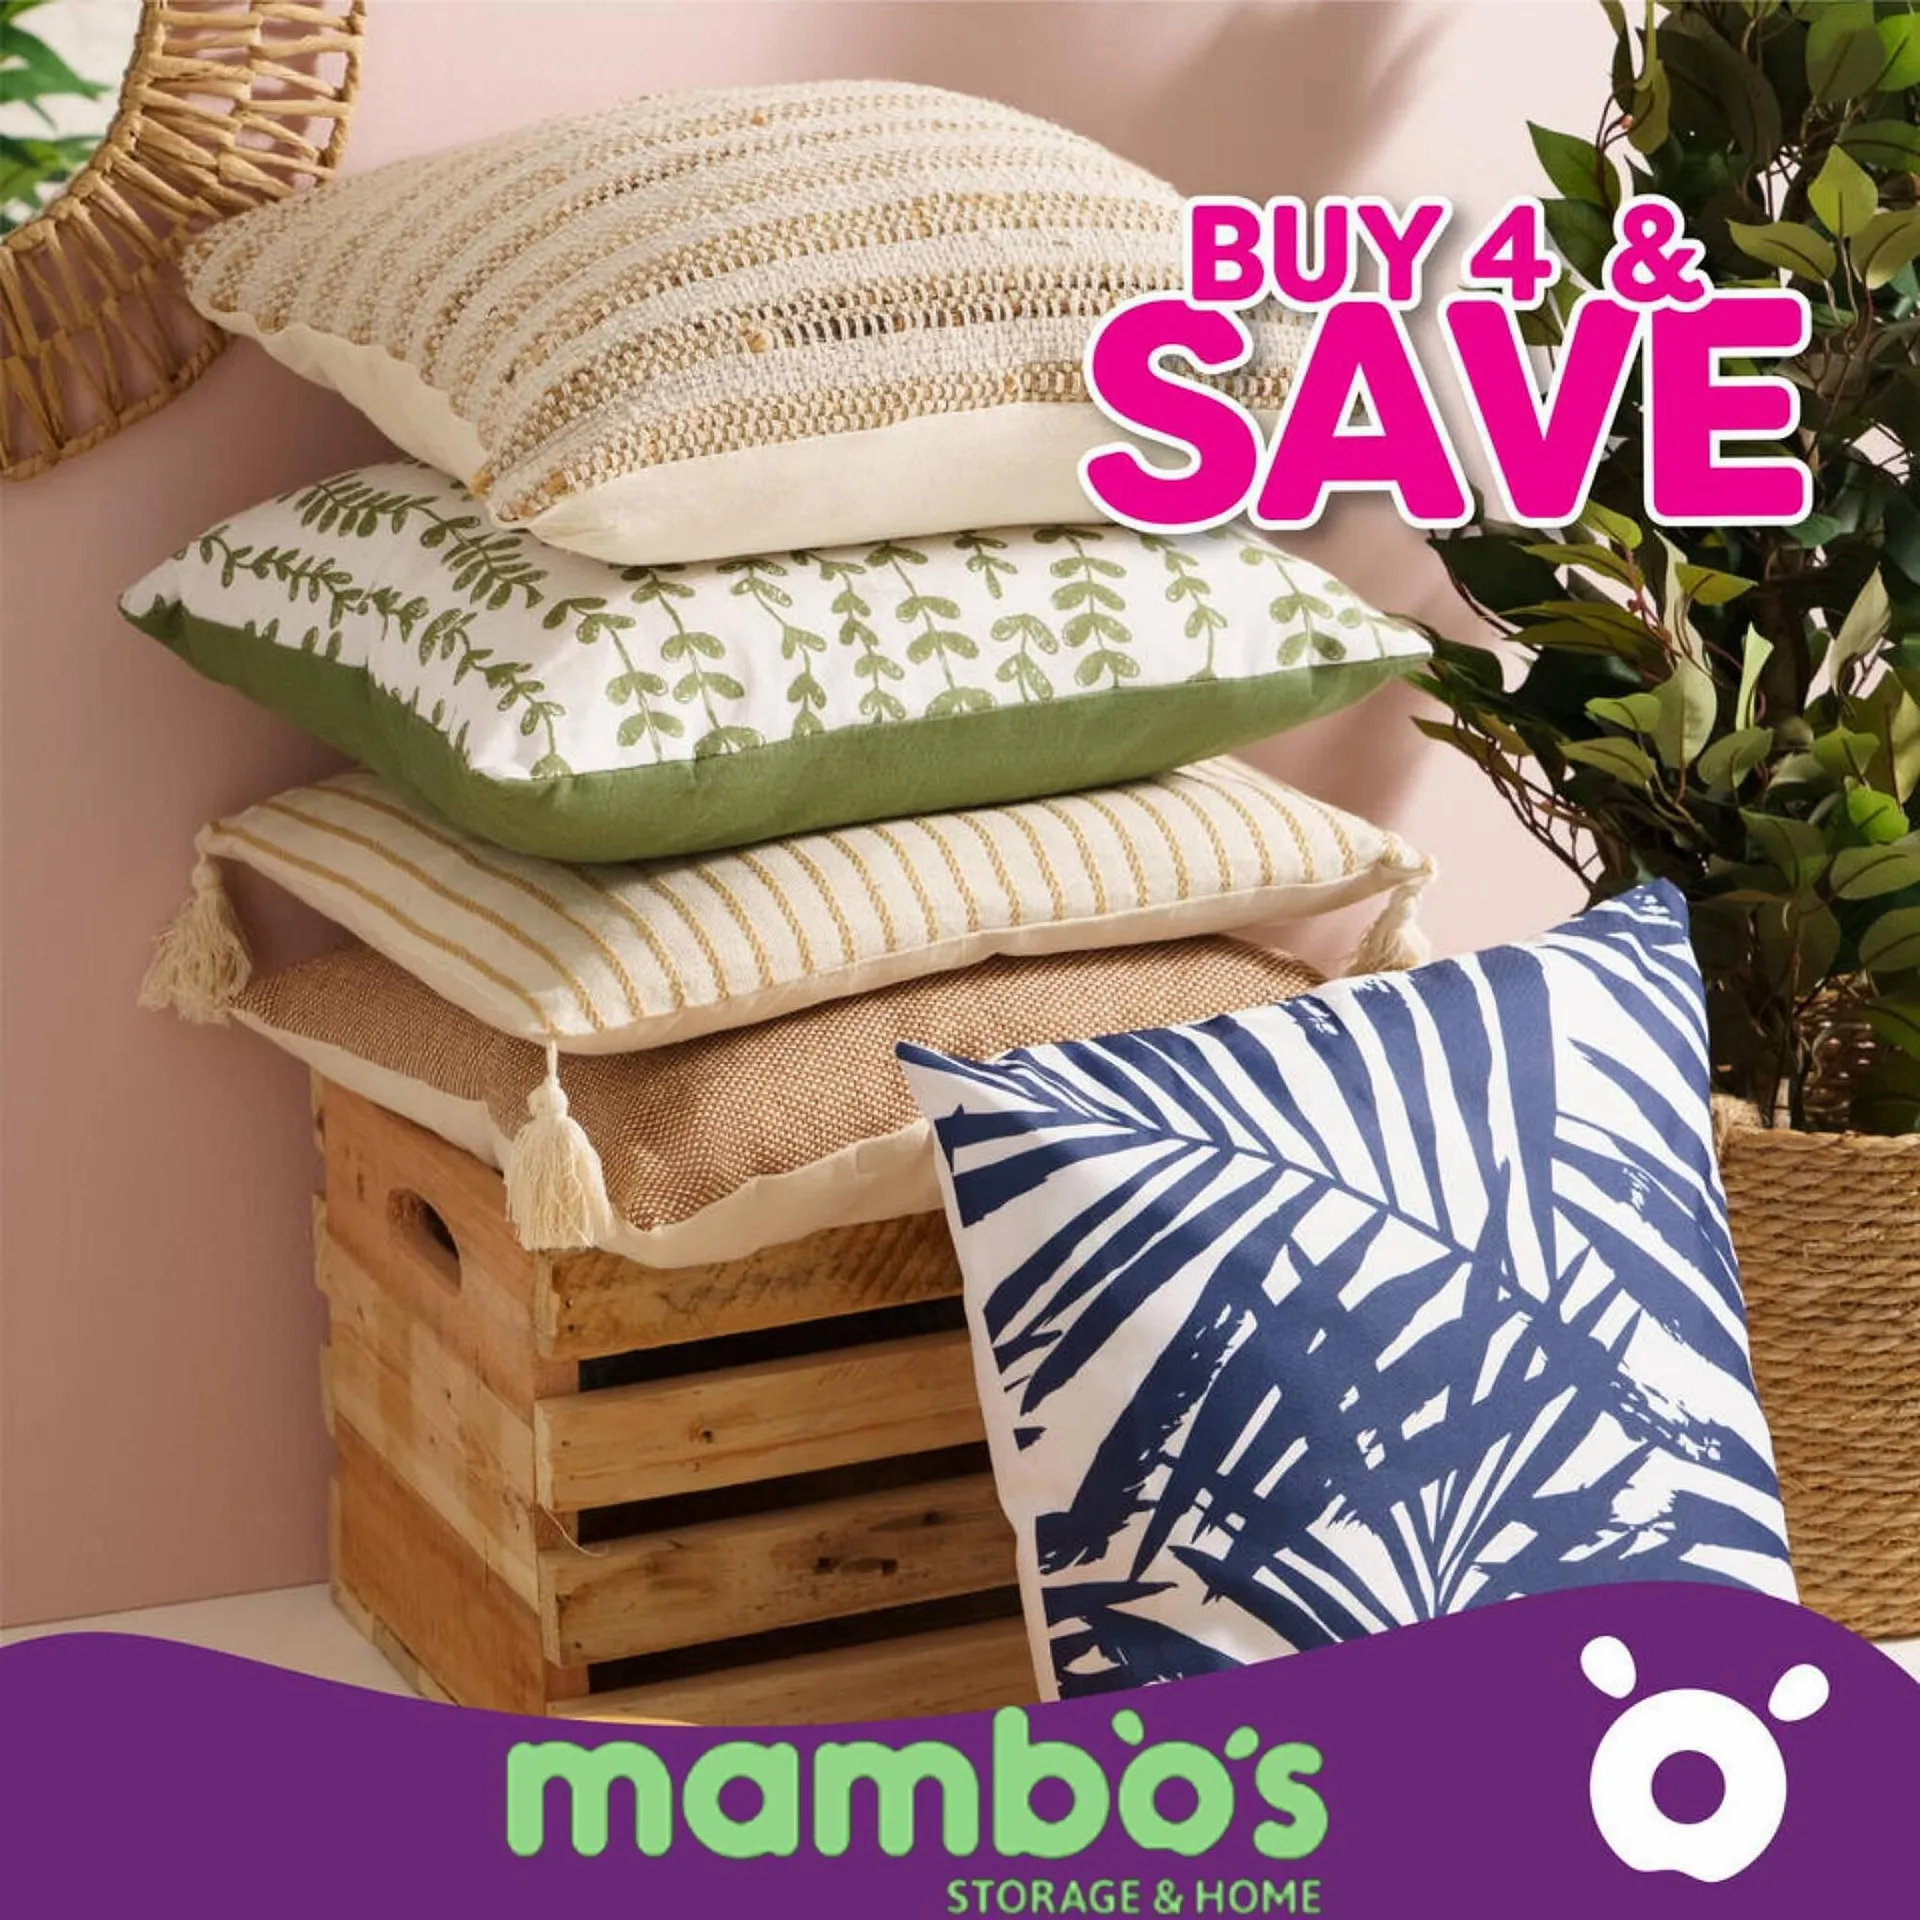 Mambos Plastics Warehouse catalogue - 1